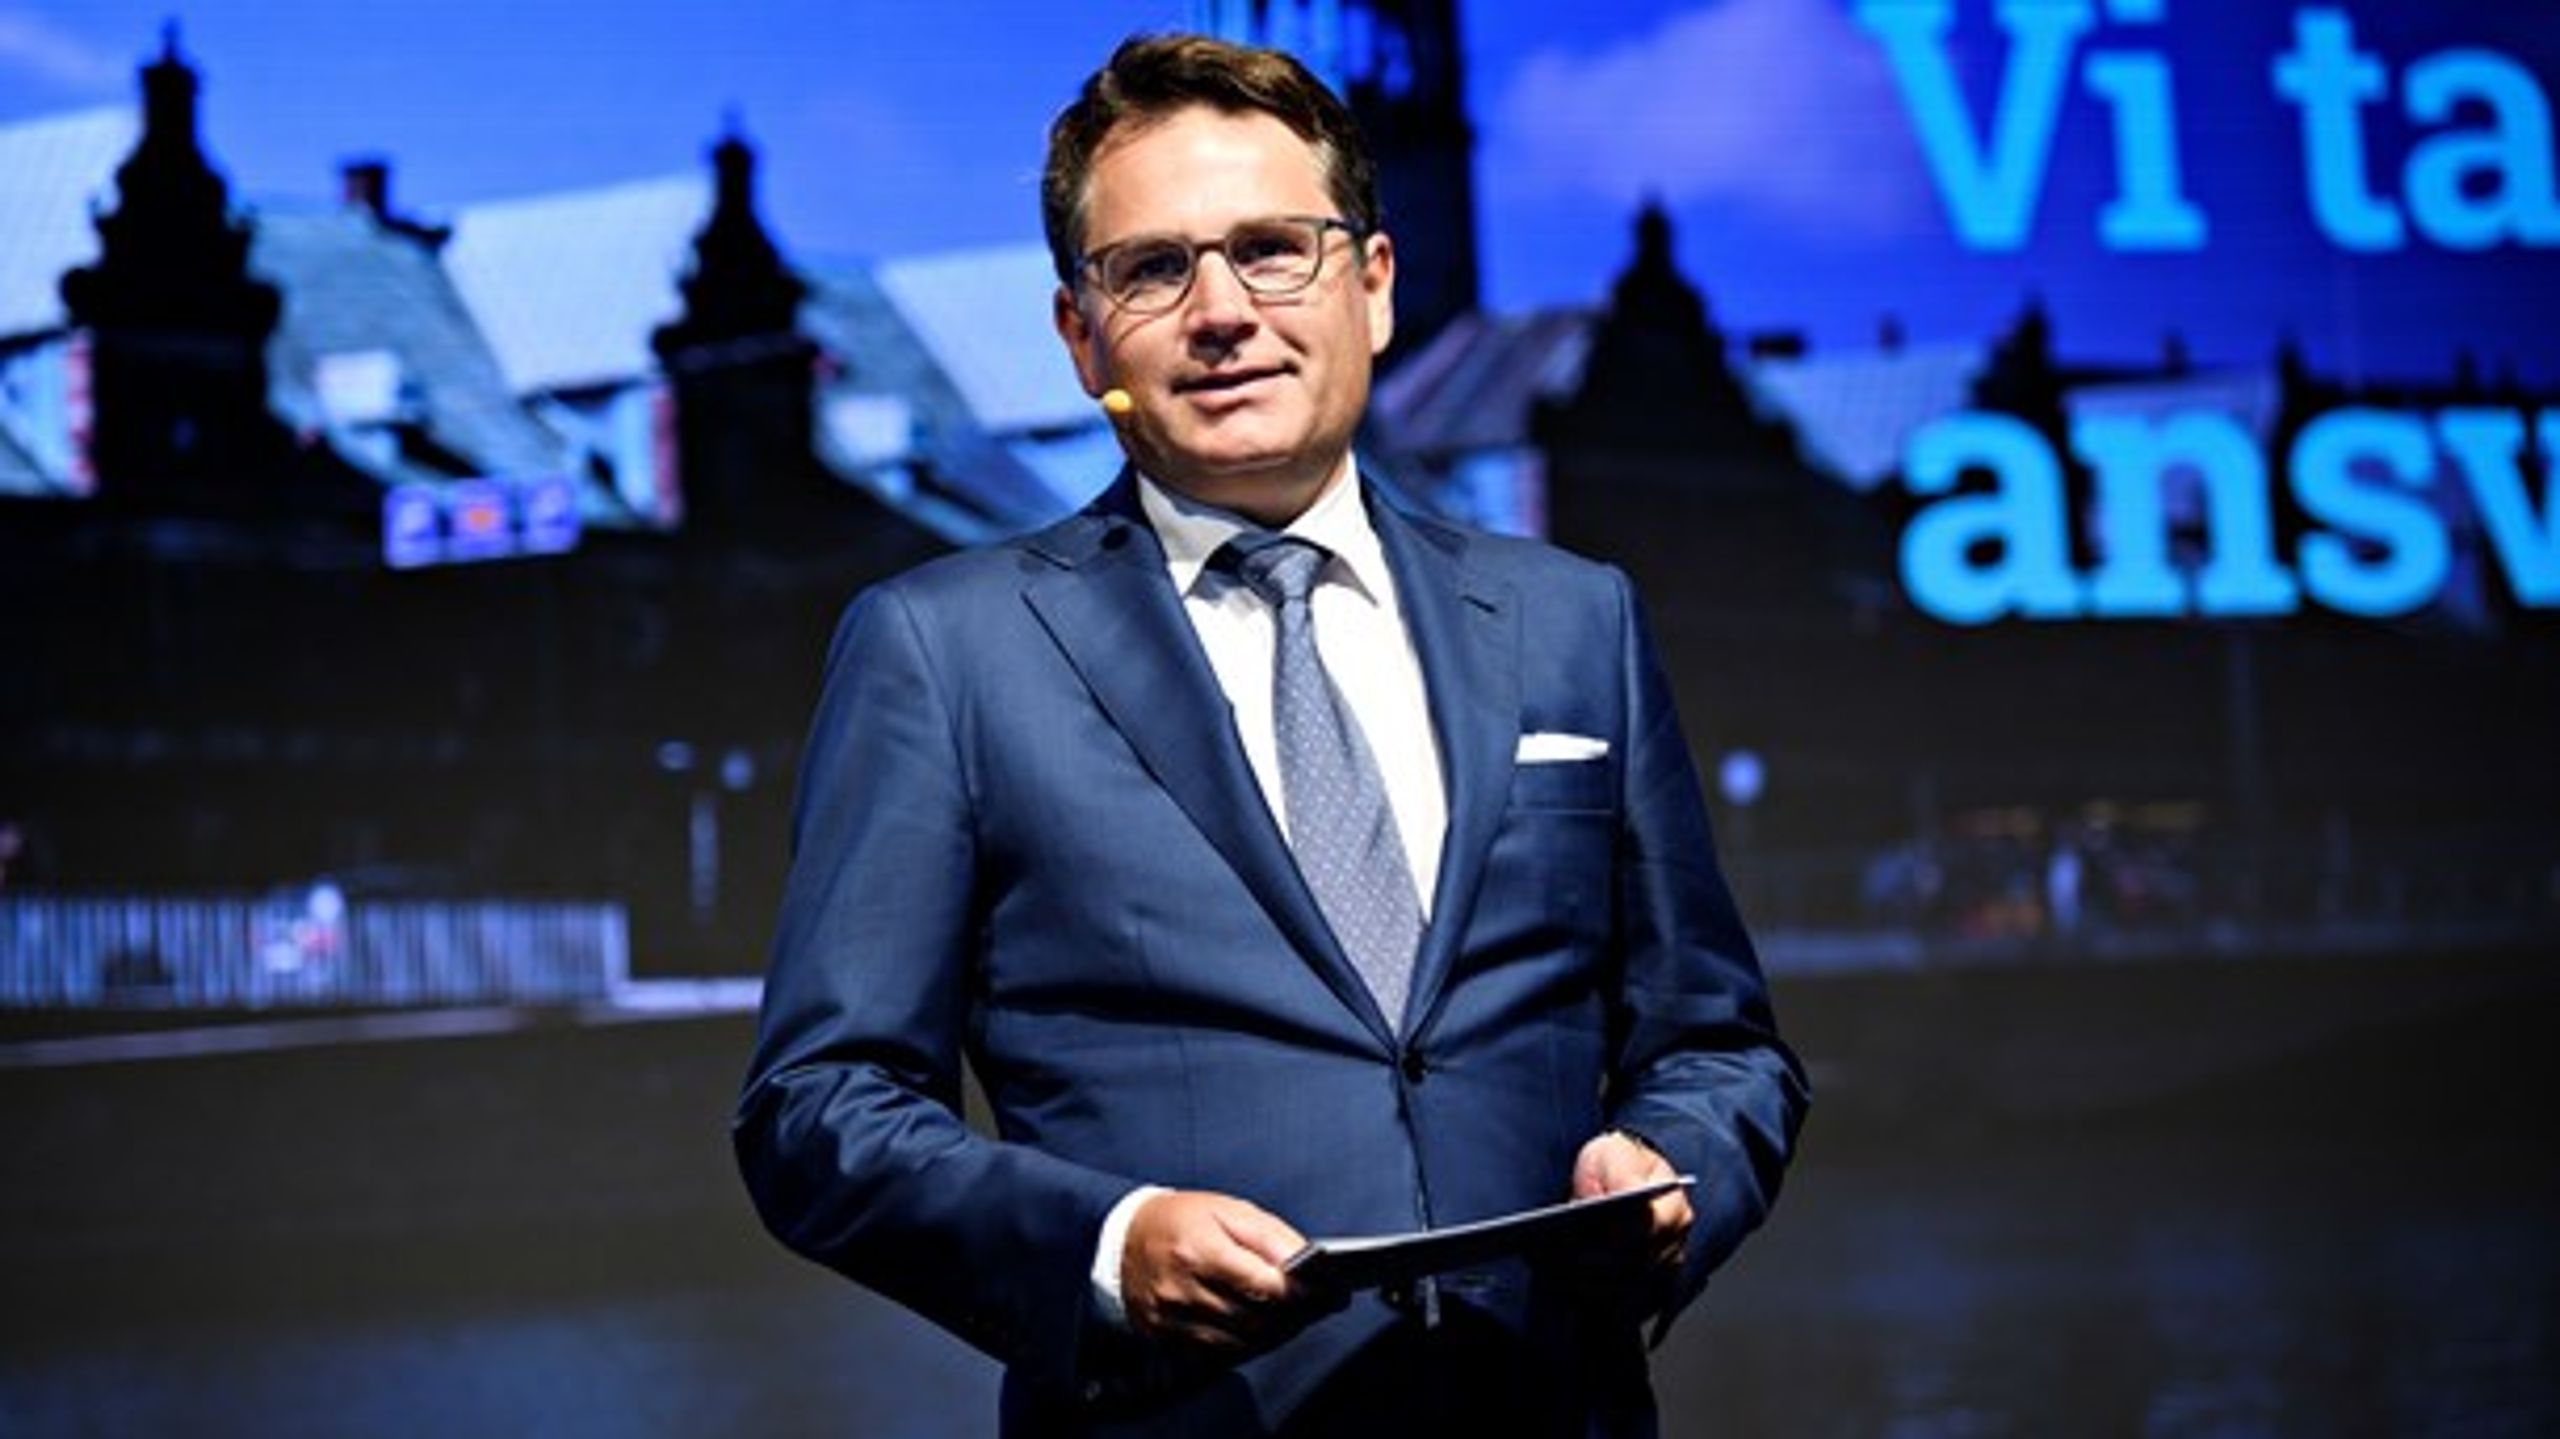 Topbillede:&nbsp;Erhvervsminister Brian Mikkelsen holder tale, da Netcompany børsnoteres 7. juni 2018.&nbsp;